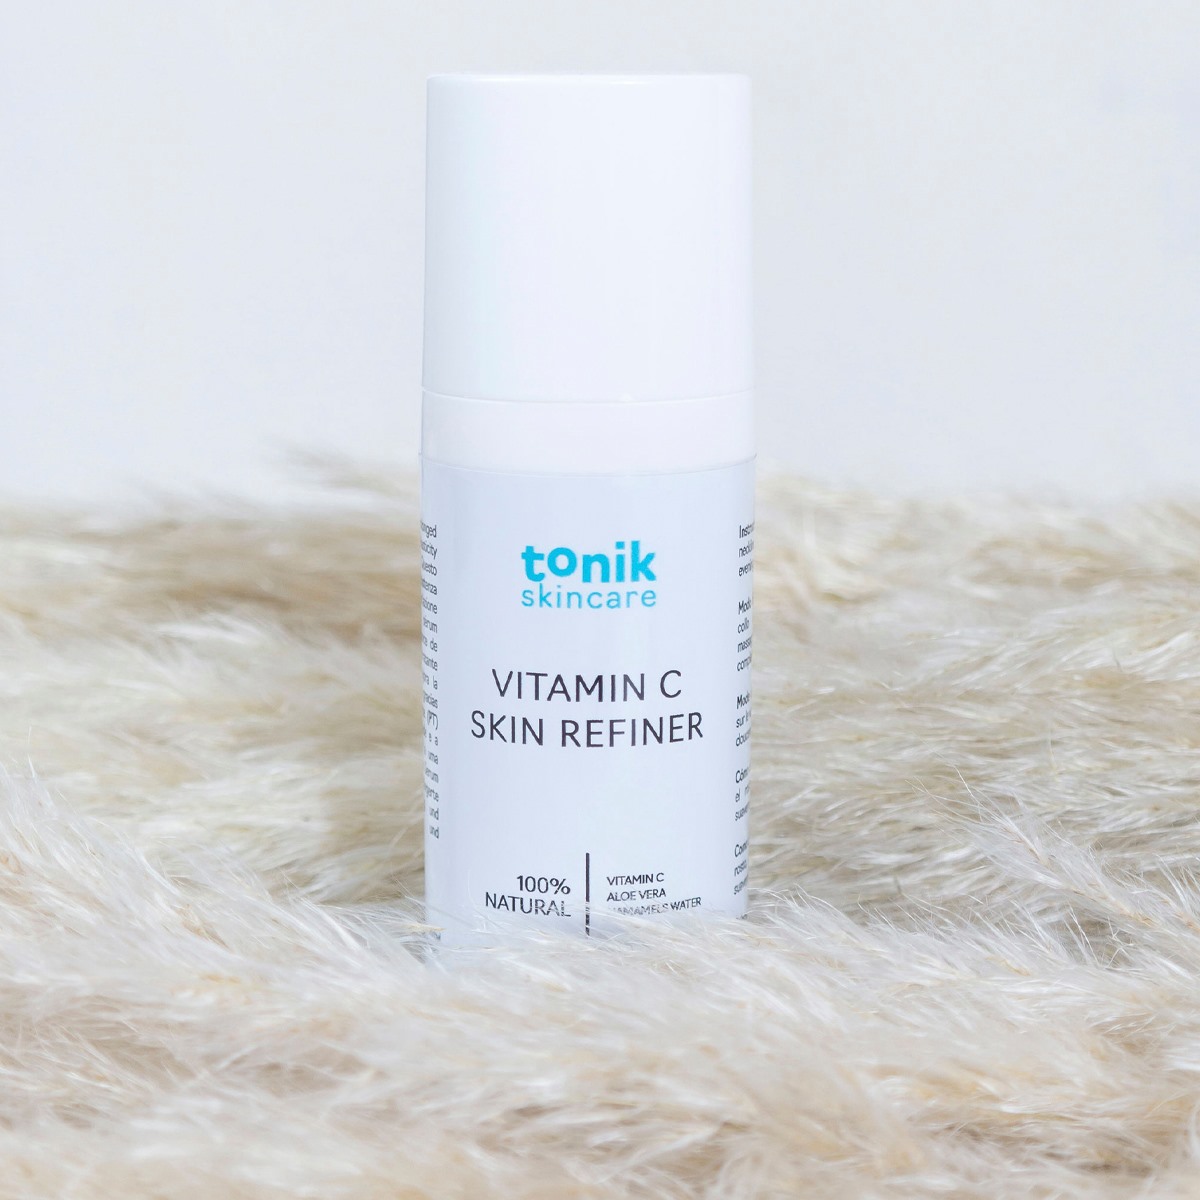 Tonik Skin Refiner - forum - bestellen - bei Amazon - preis